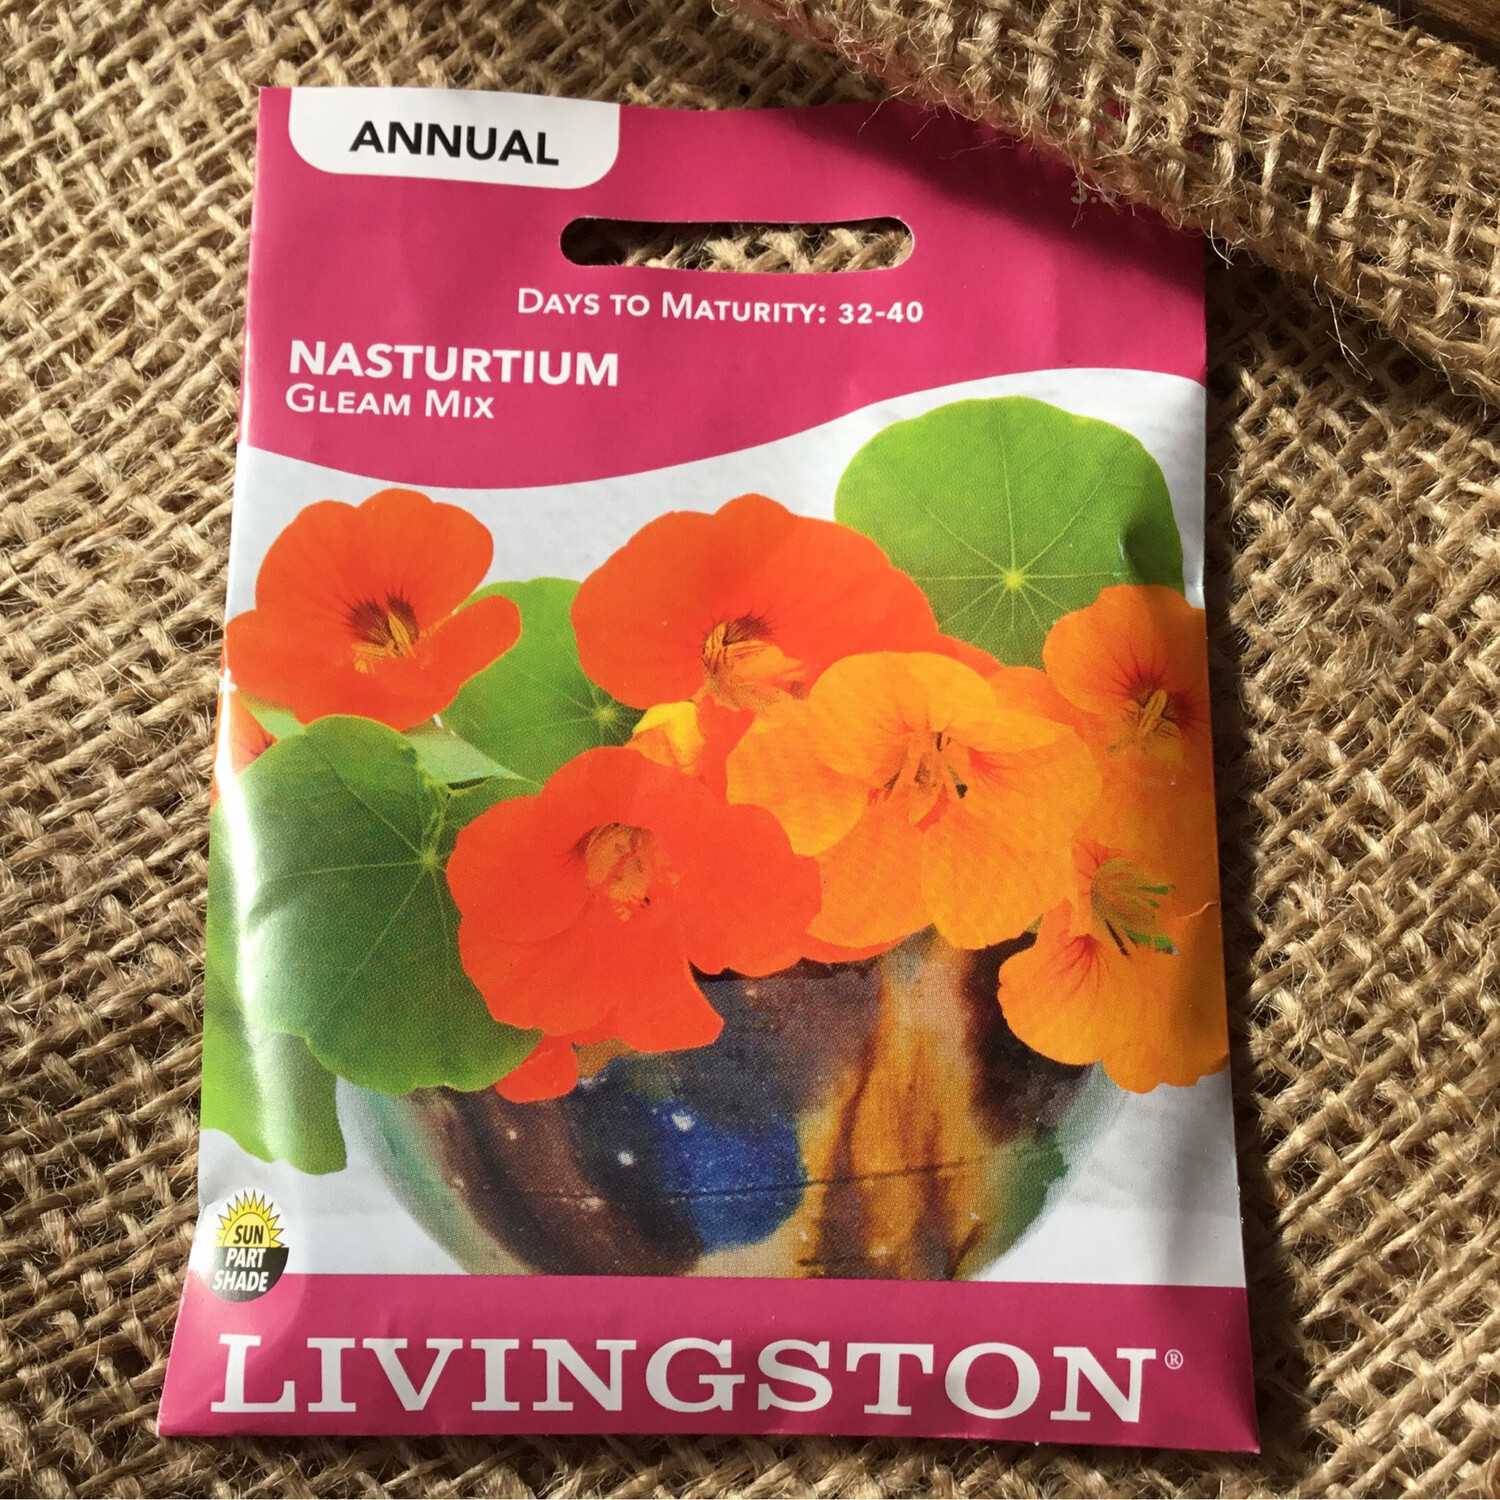 (Seed) Nasturtium GLEAM Mix $2.99